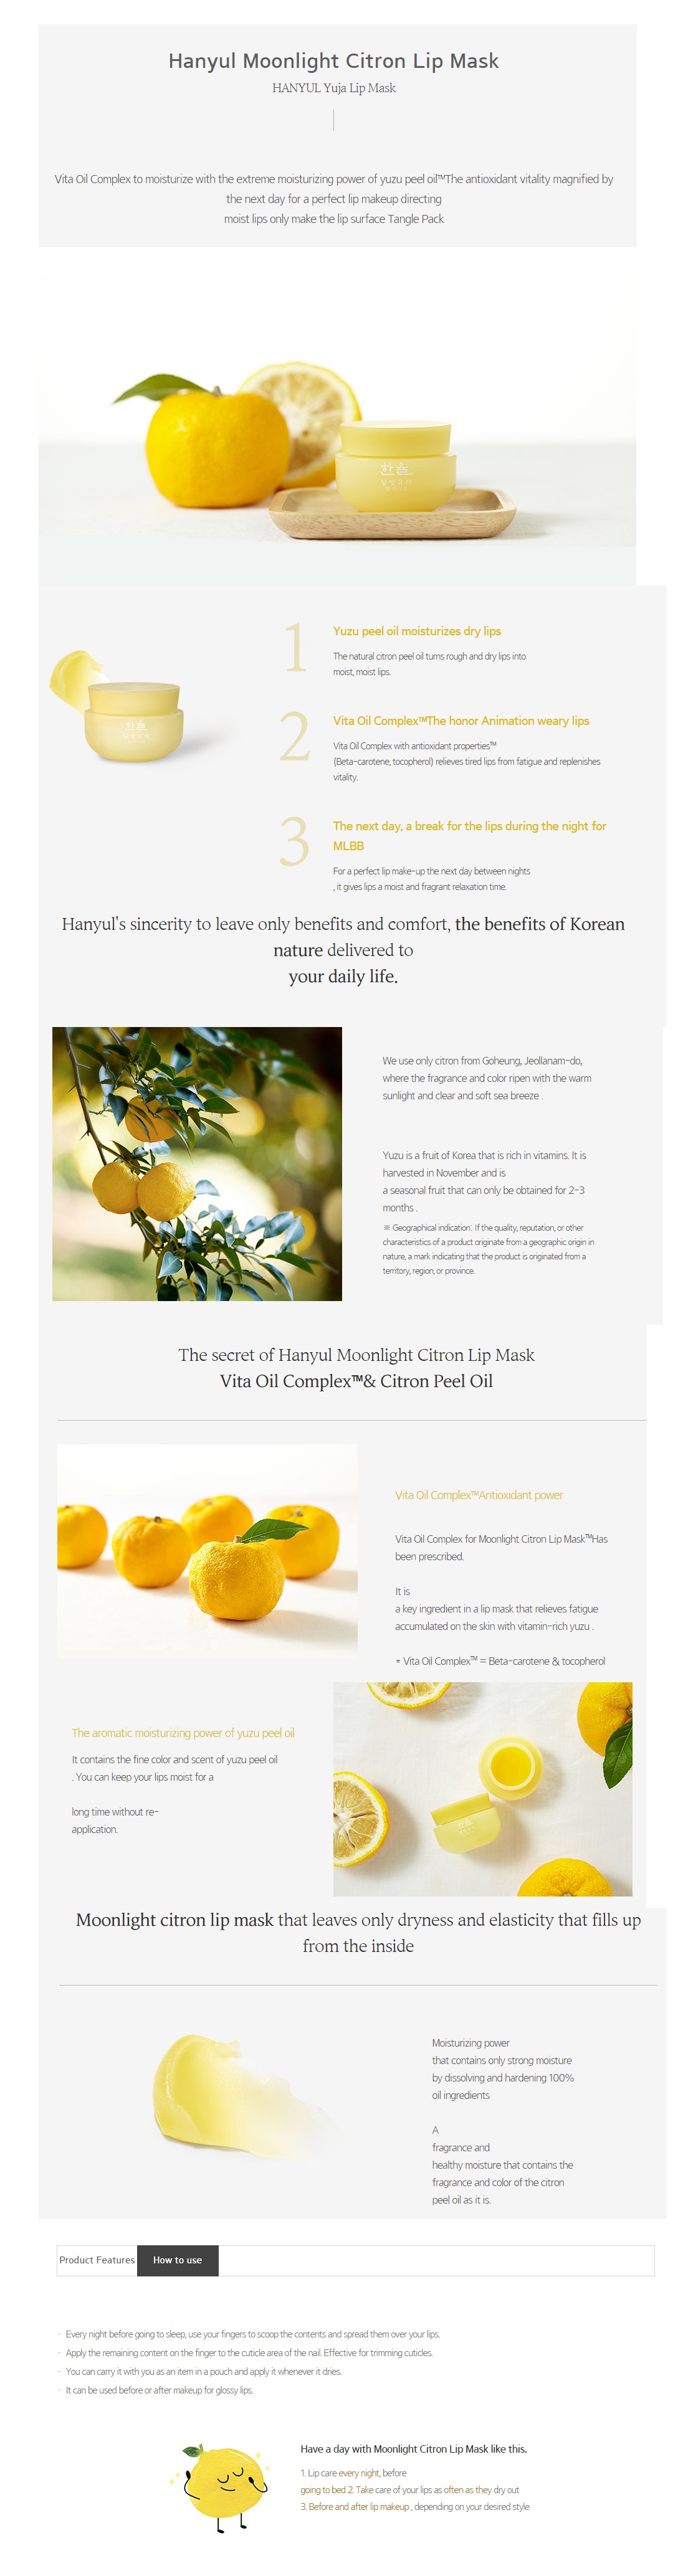 HanYul Moonlight Citron Lip Mask korean skincare product online shop malaysia China macau1